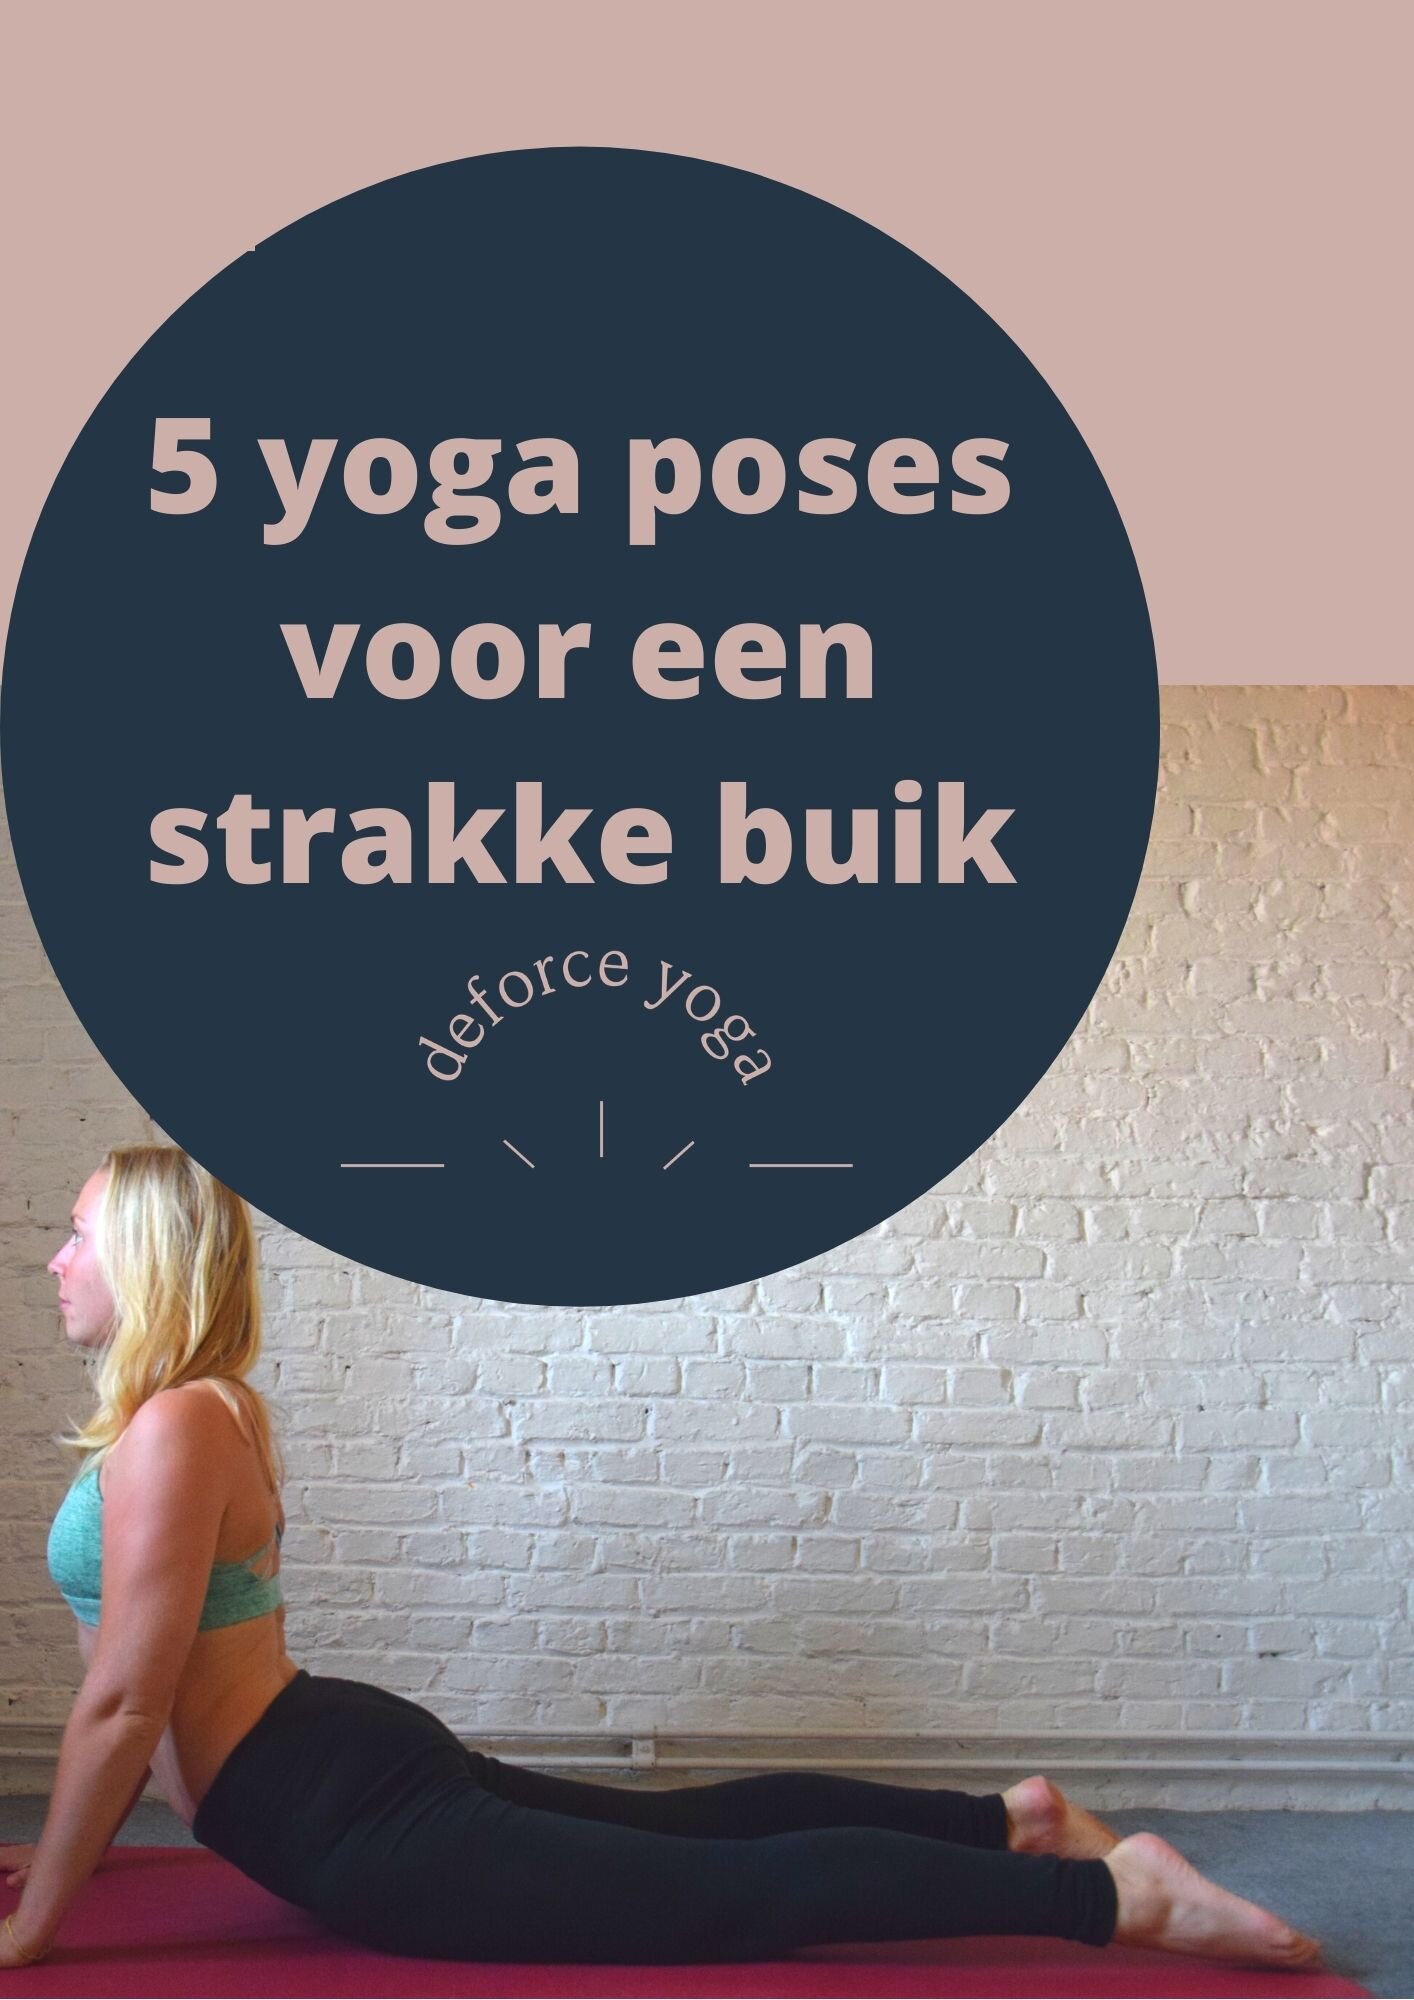 5 yoga poses voor een strakke buik.jpg